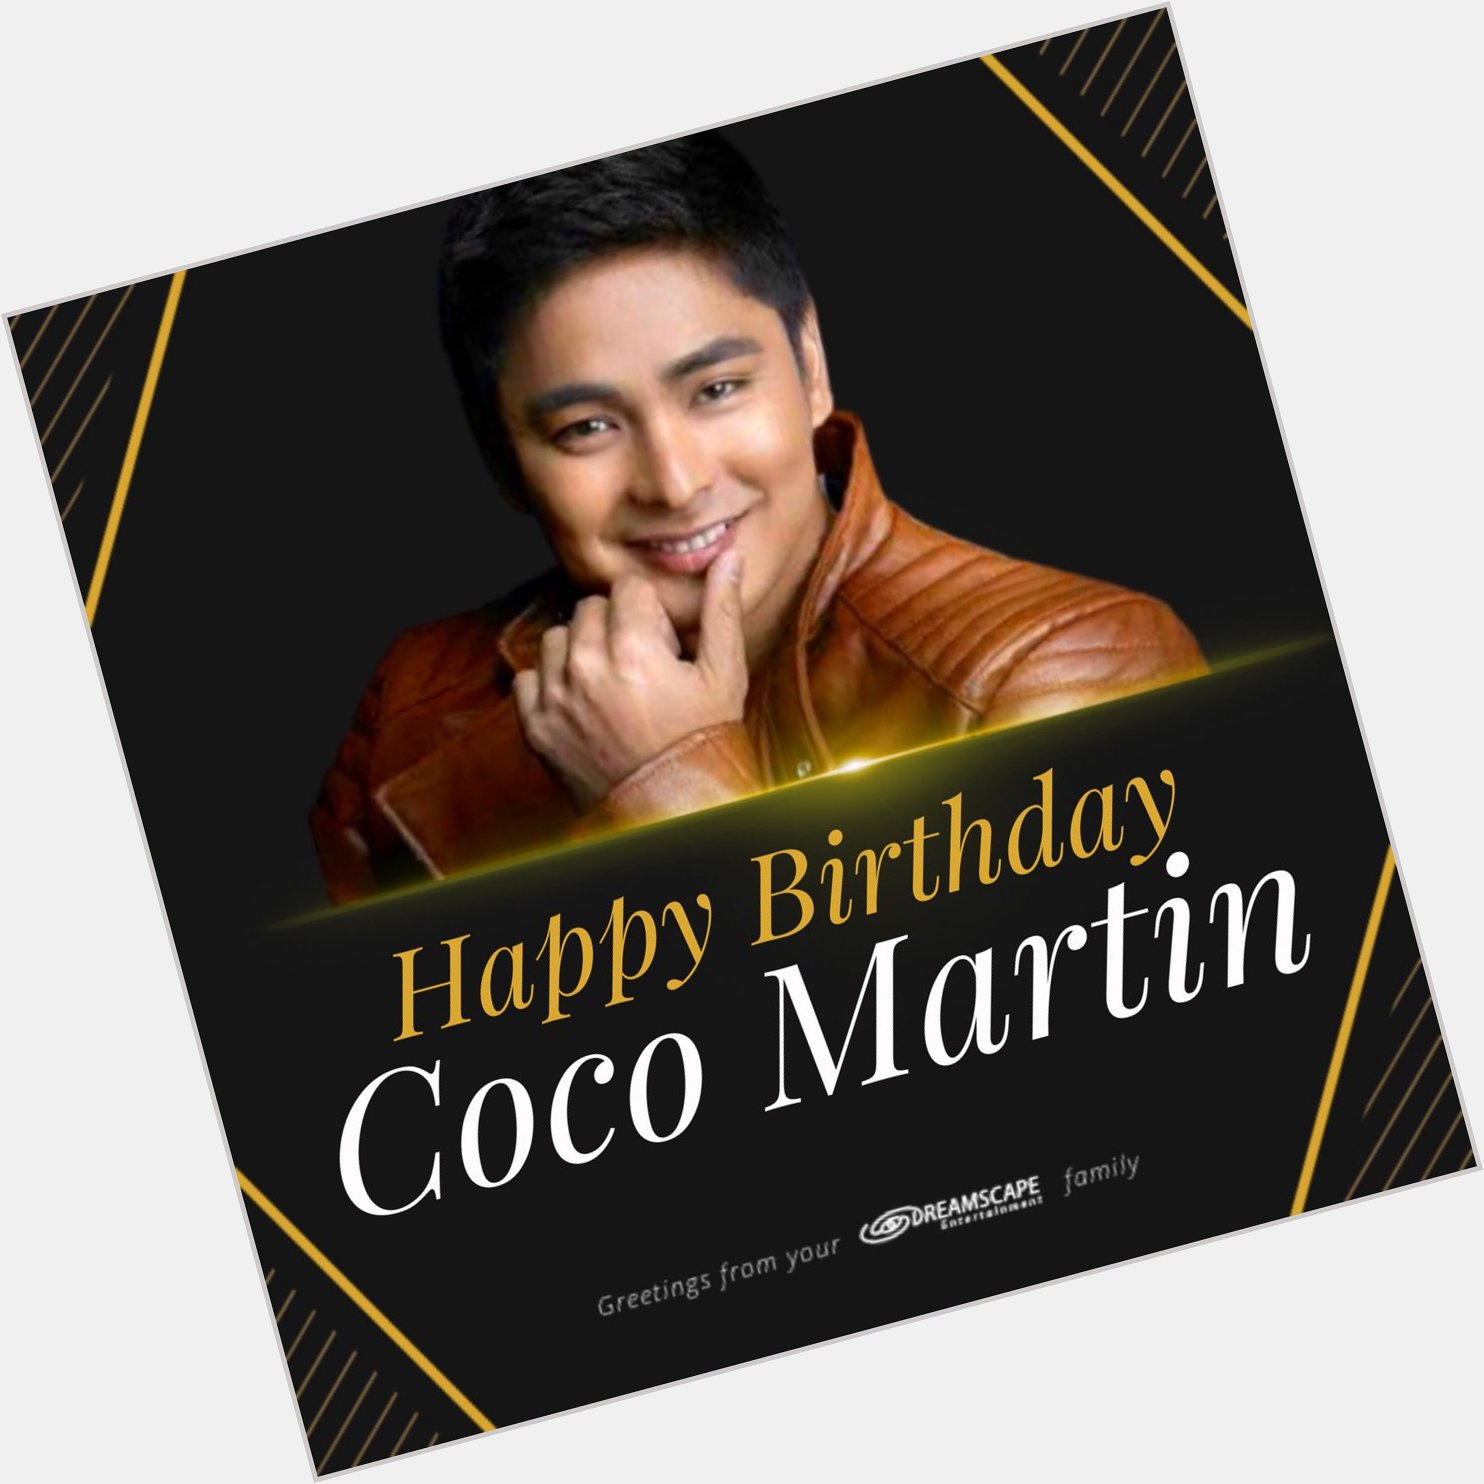 Happy birthday Coco Martin    